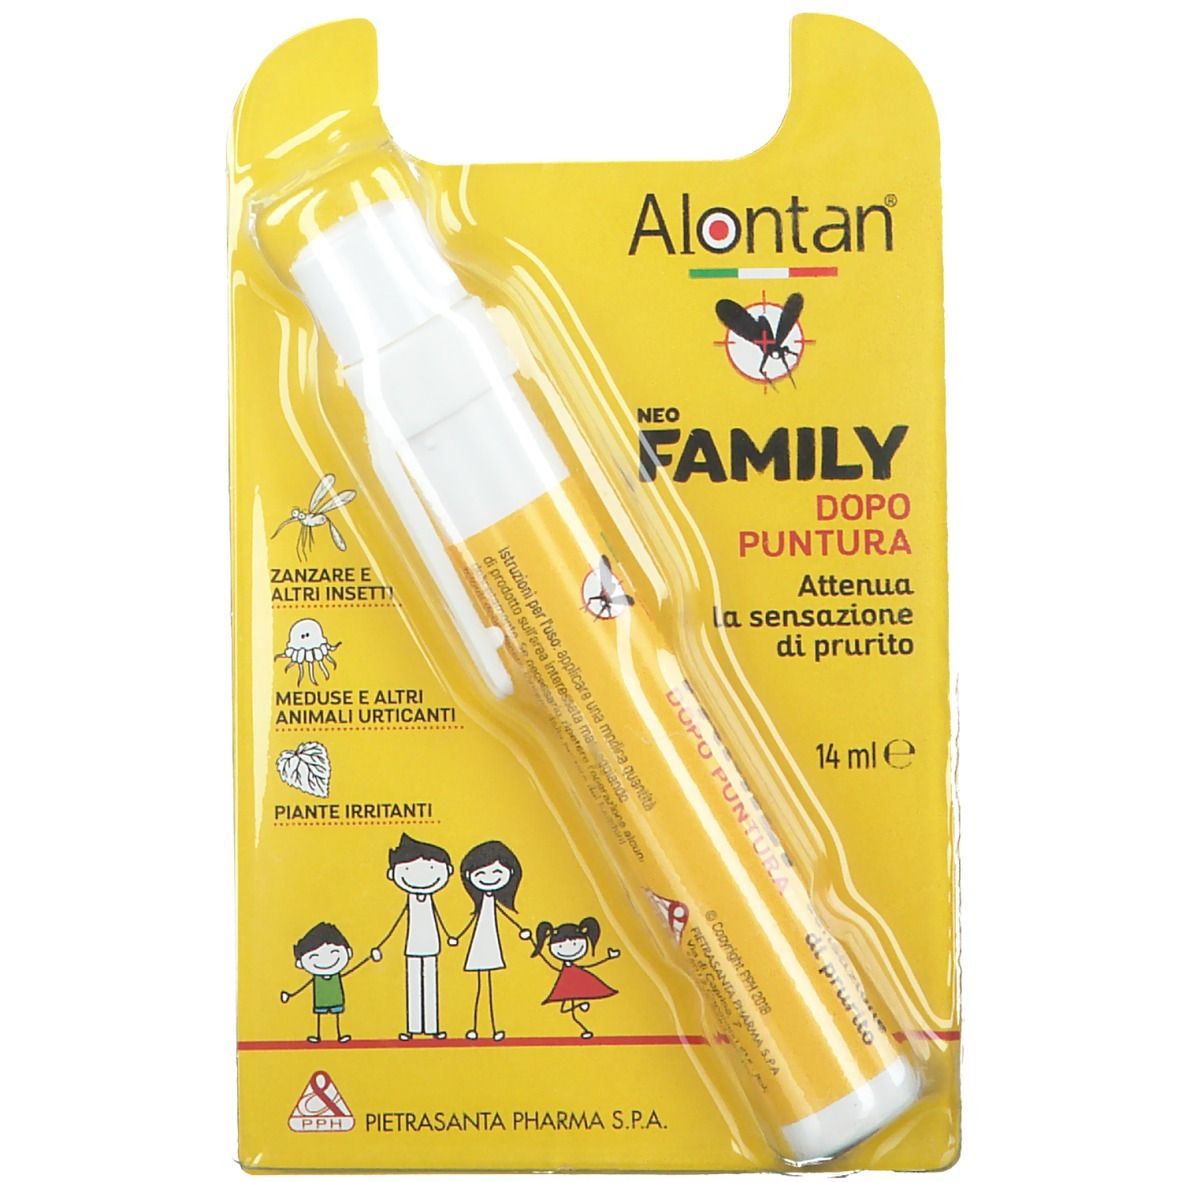 Alontan® Family Penna Dopo Puntura